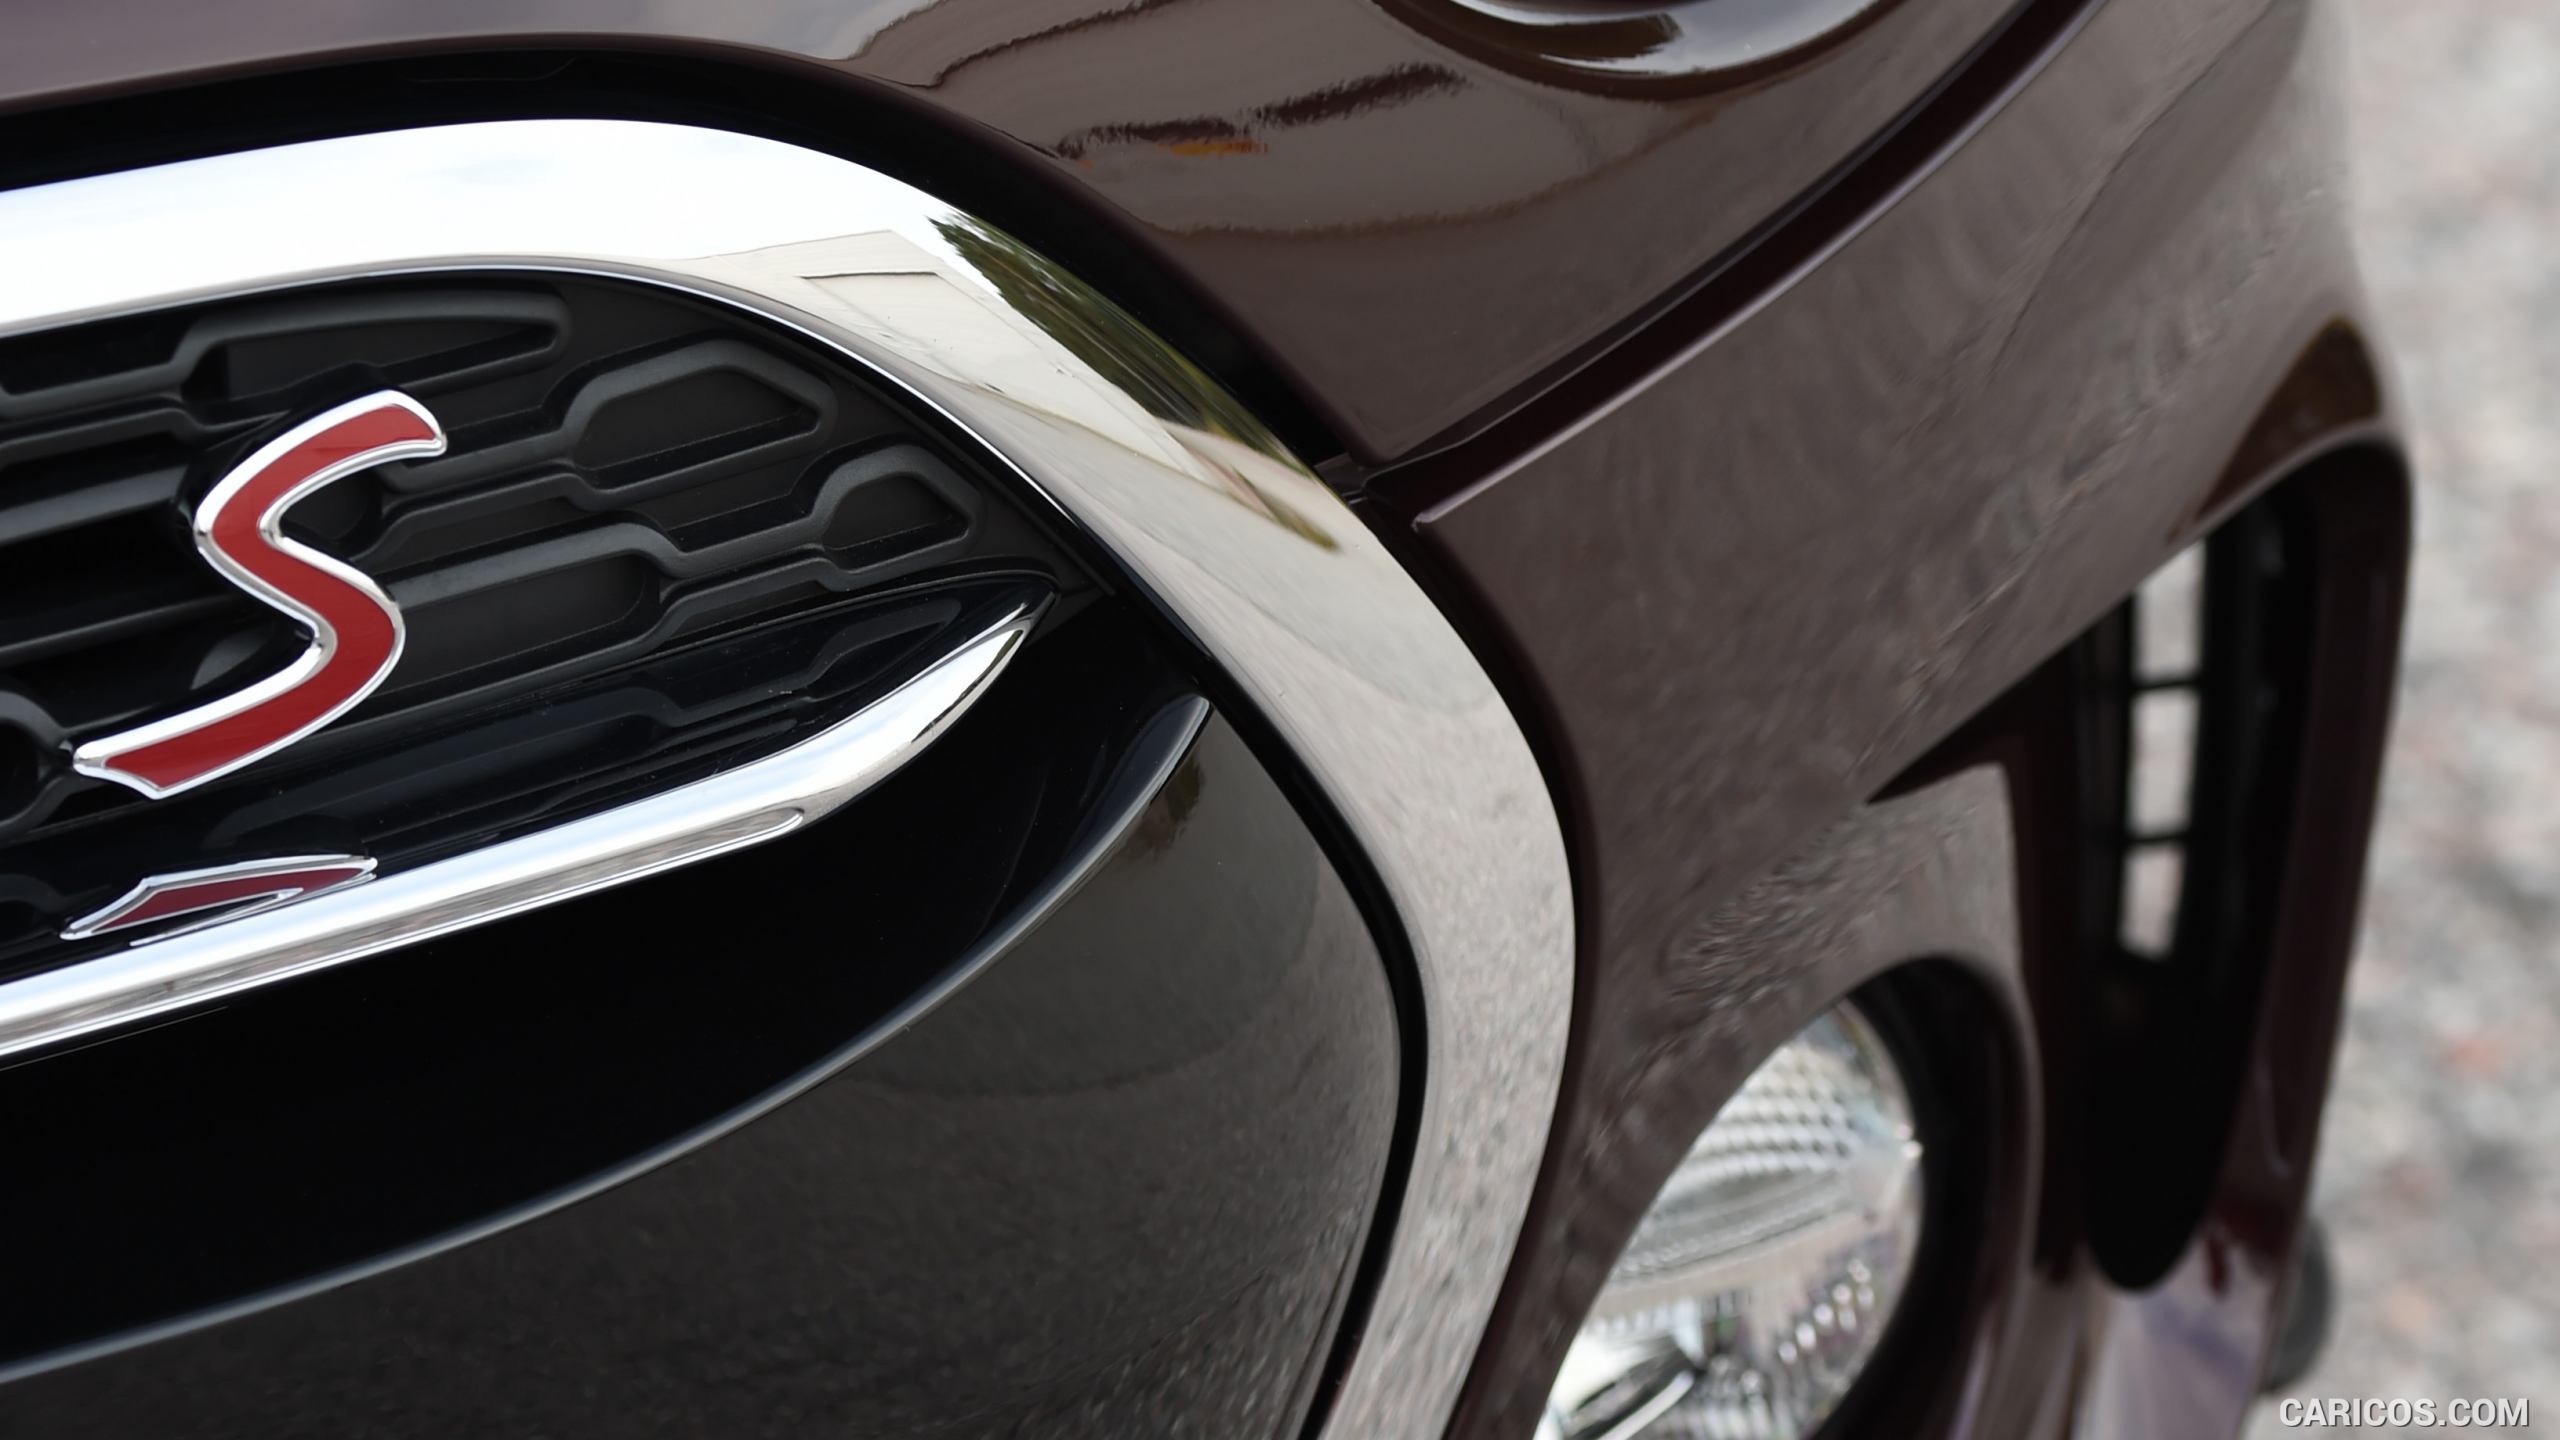 2016 MINI Cooper S Clubman in Metallic Pure Burgundy - Detail, #342 of 380